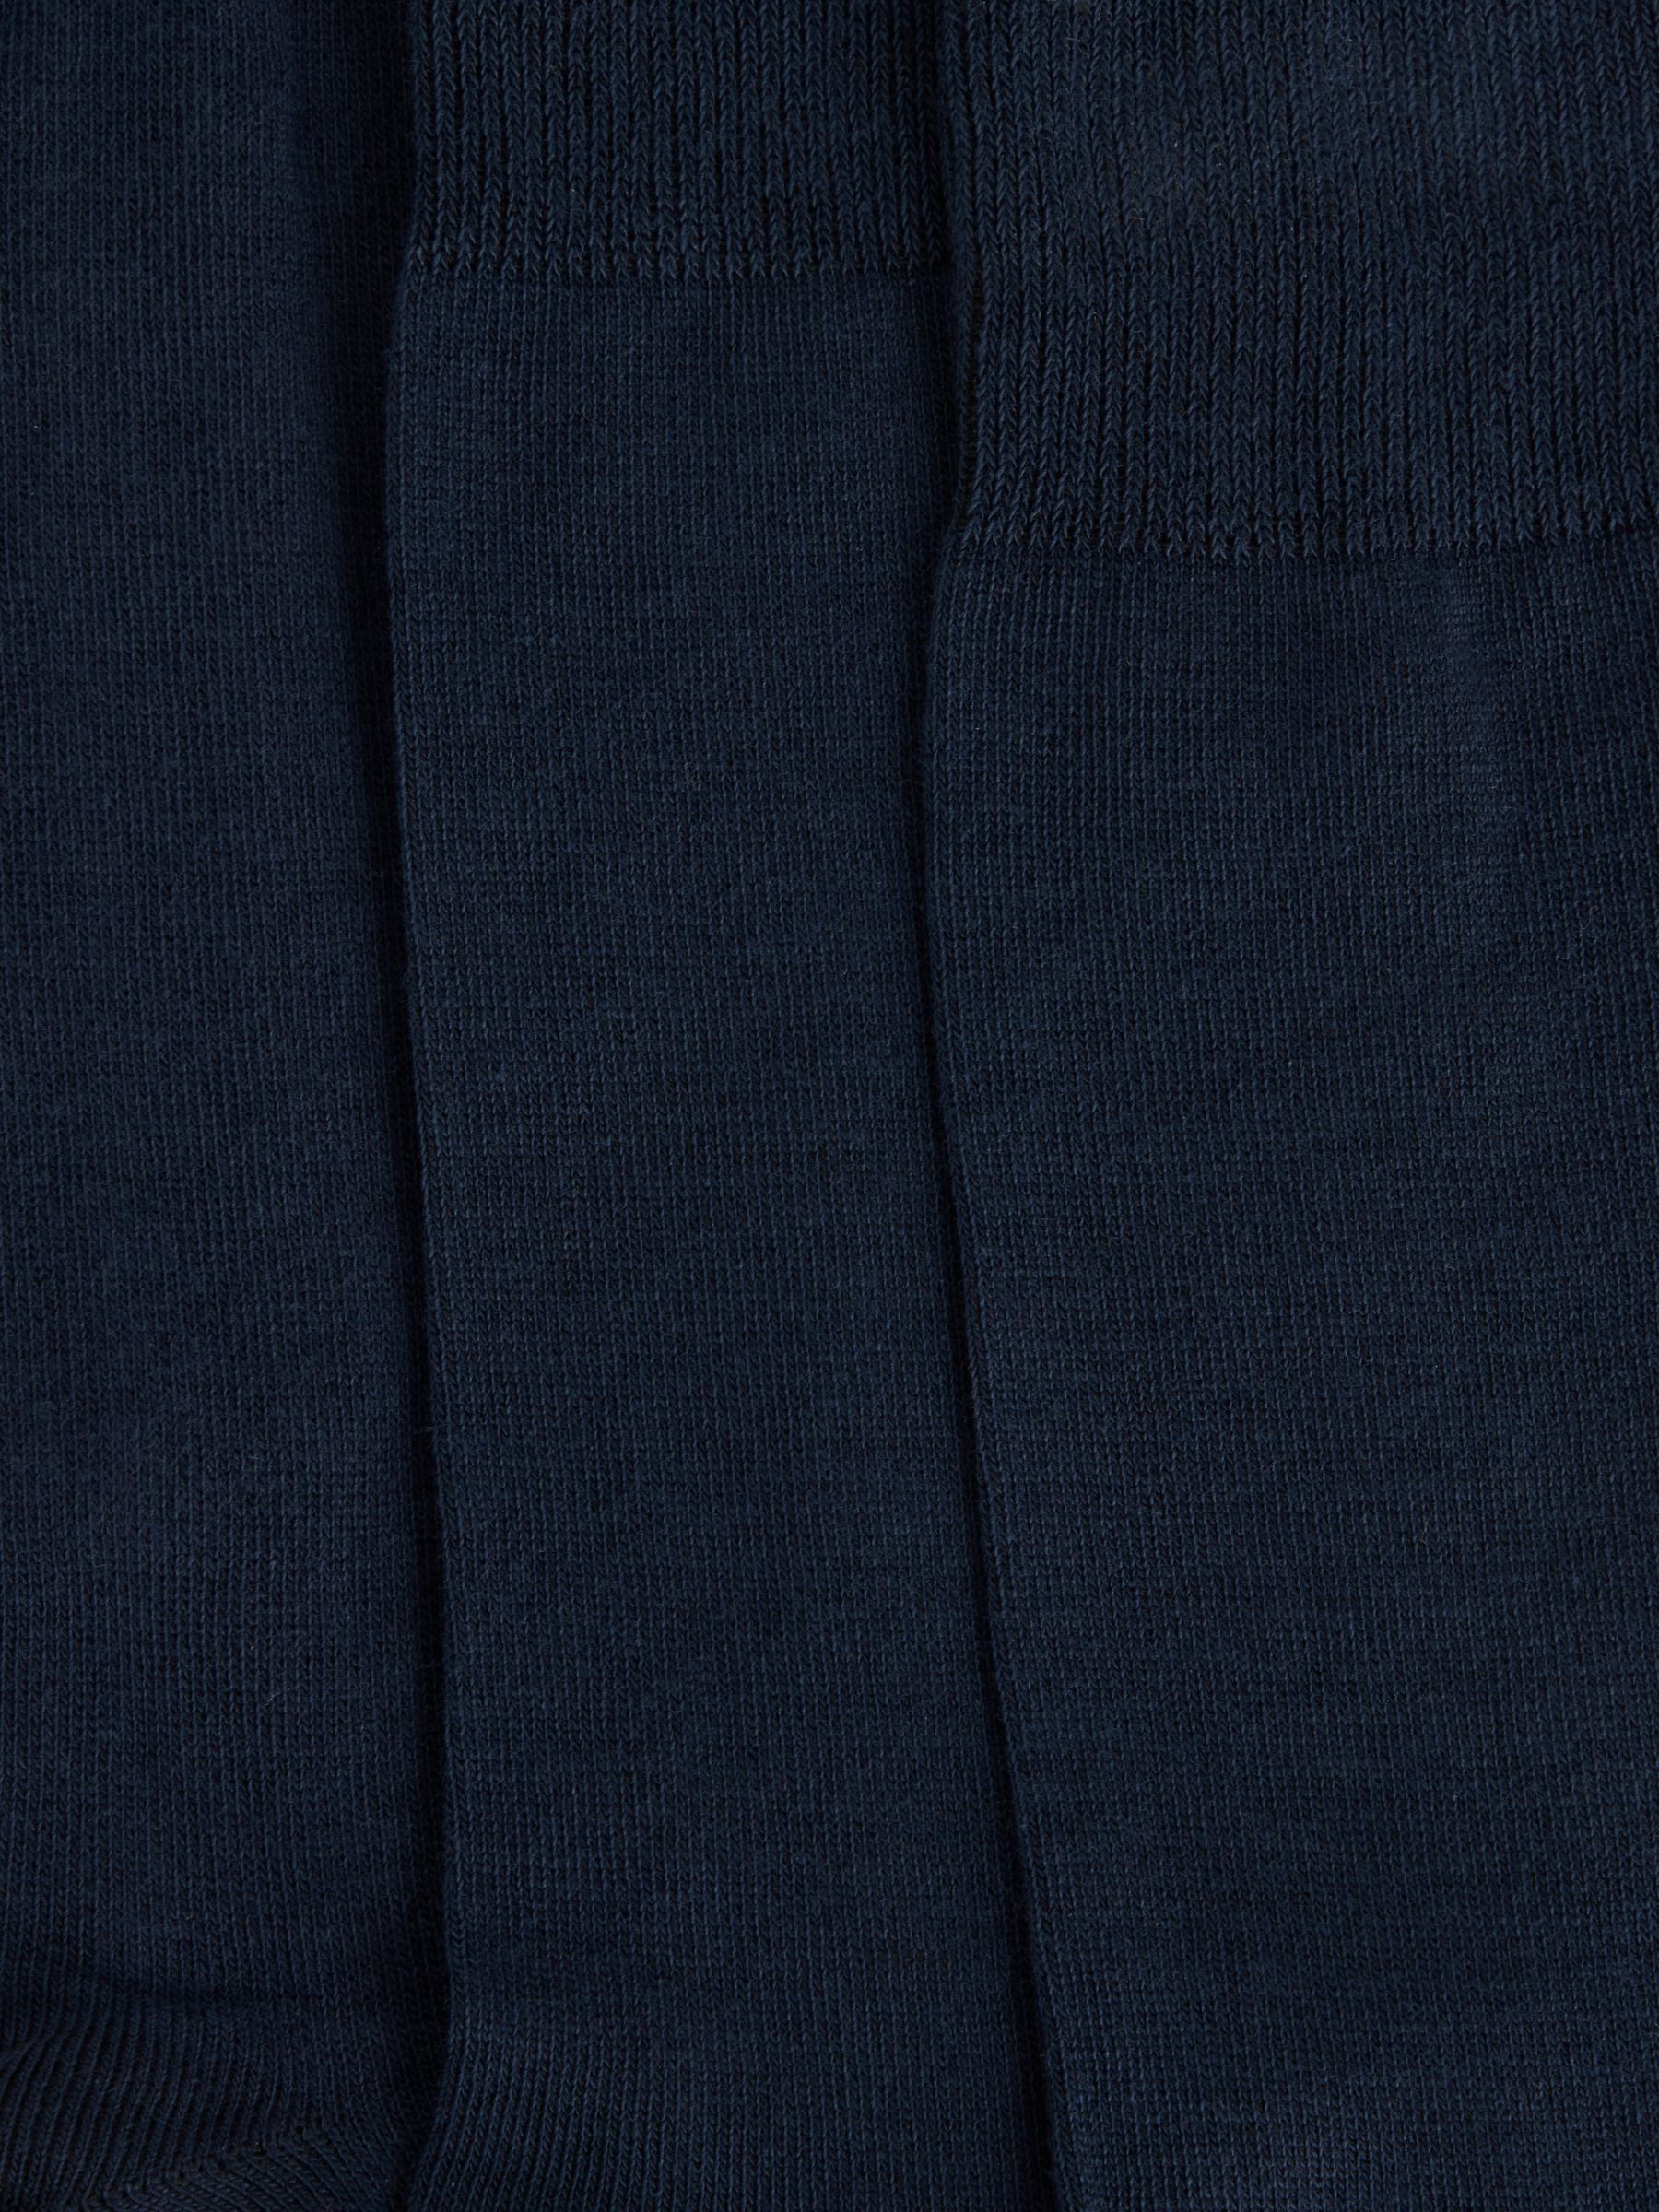 John Lewis ANYDAY Cotton Rich Plain Men's Socks, Pack of 5, Blue Navy, S